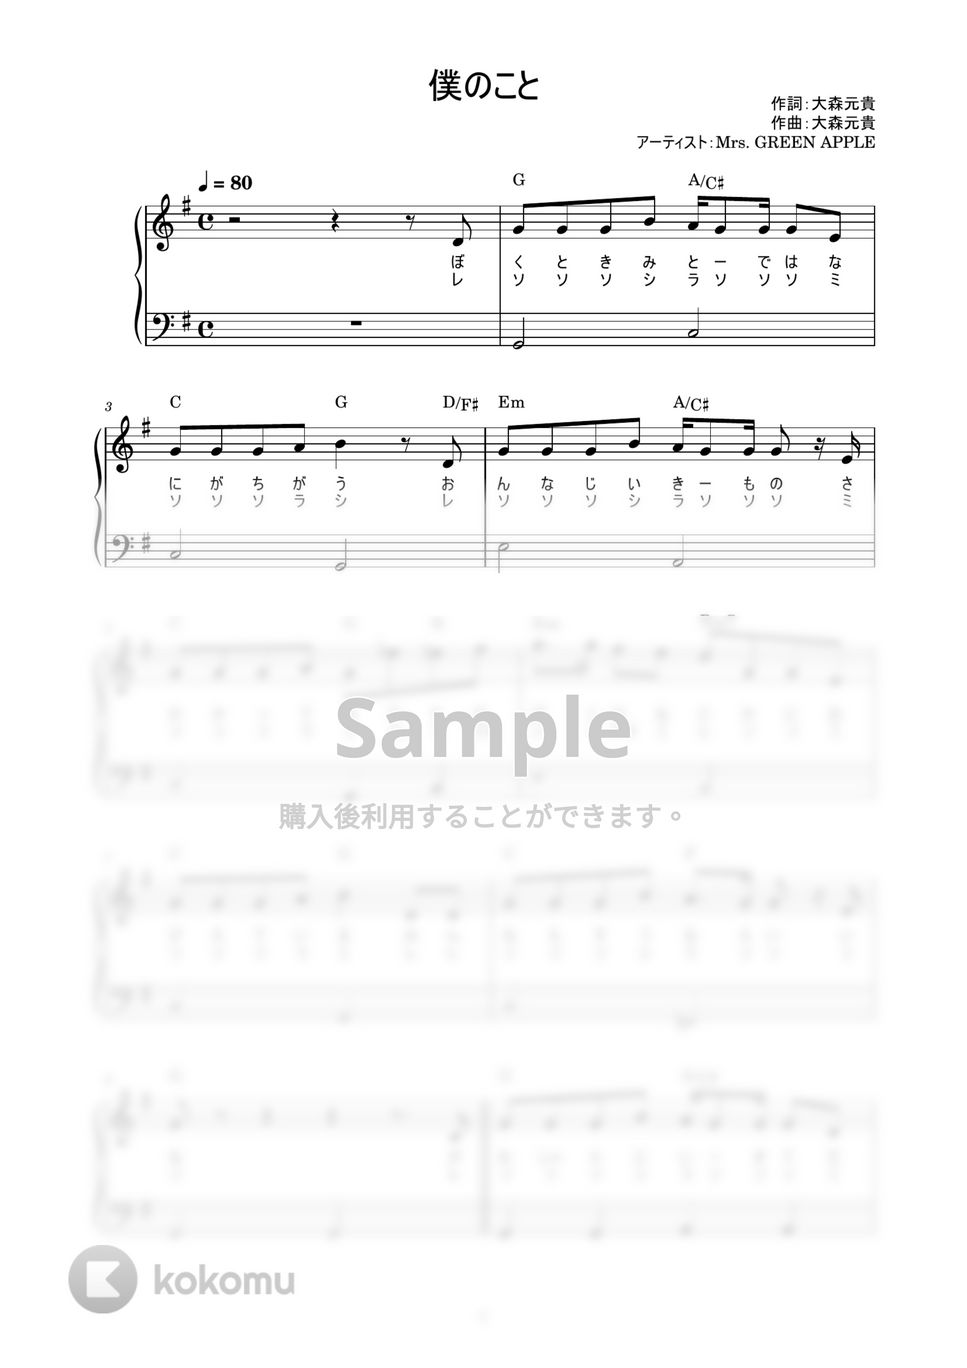 Mrs.GREEN APPLE - 僕のこと (かんたん / 歌詞付き / ドレミ付き / 初心者) by piano.tokyo